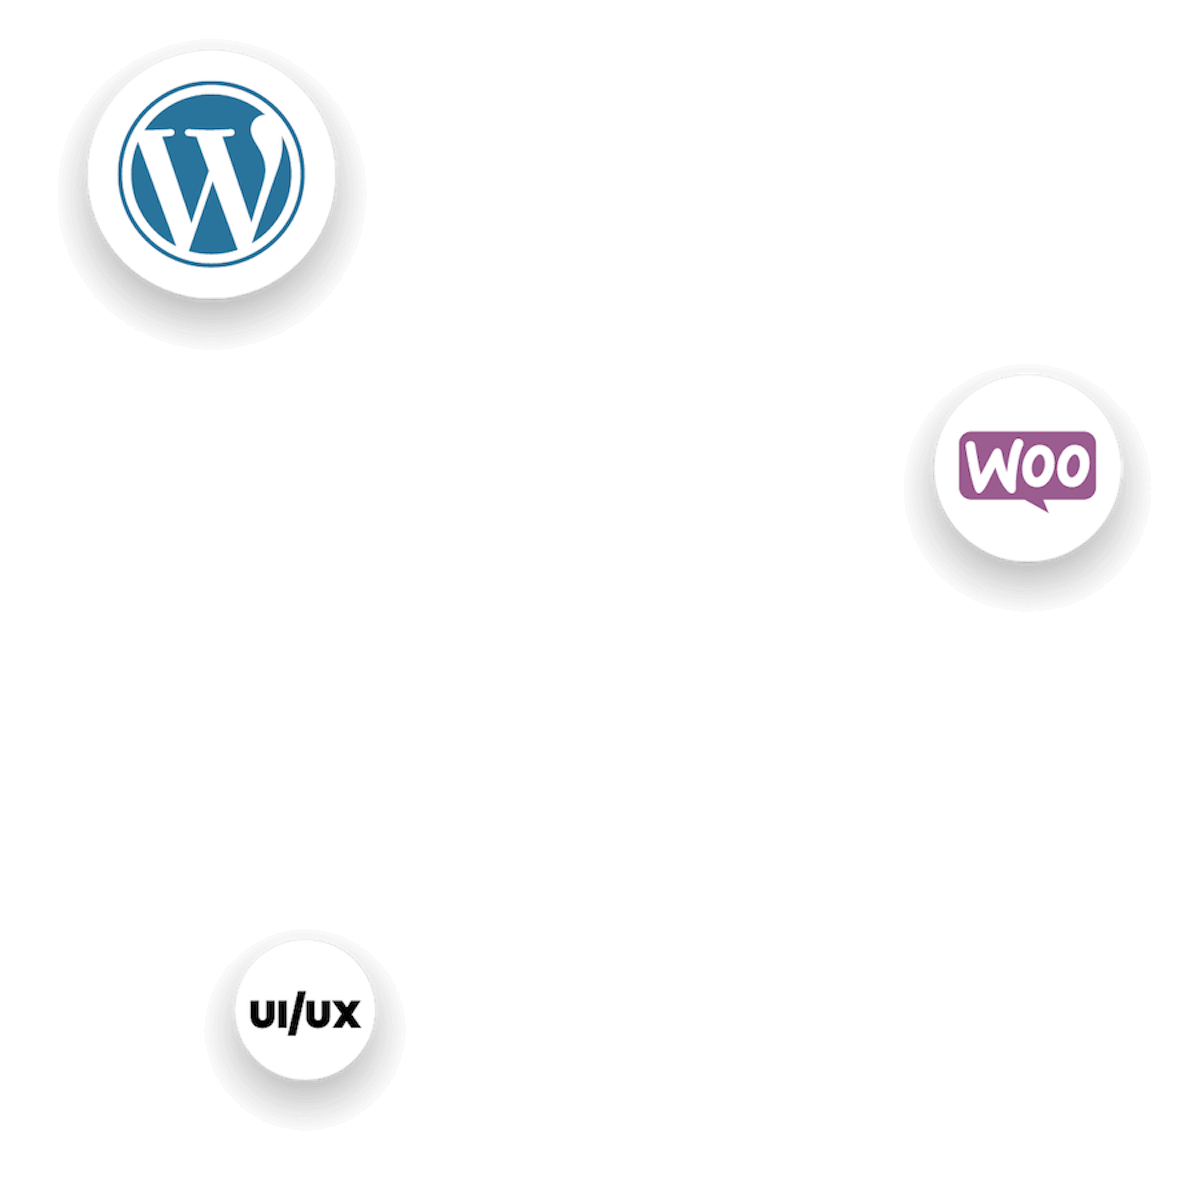 Wordpress, woocommerce, uiux